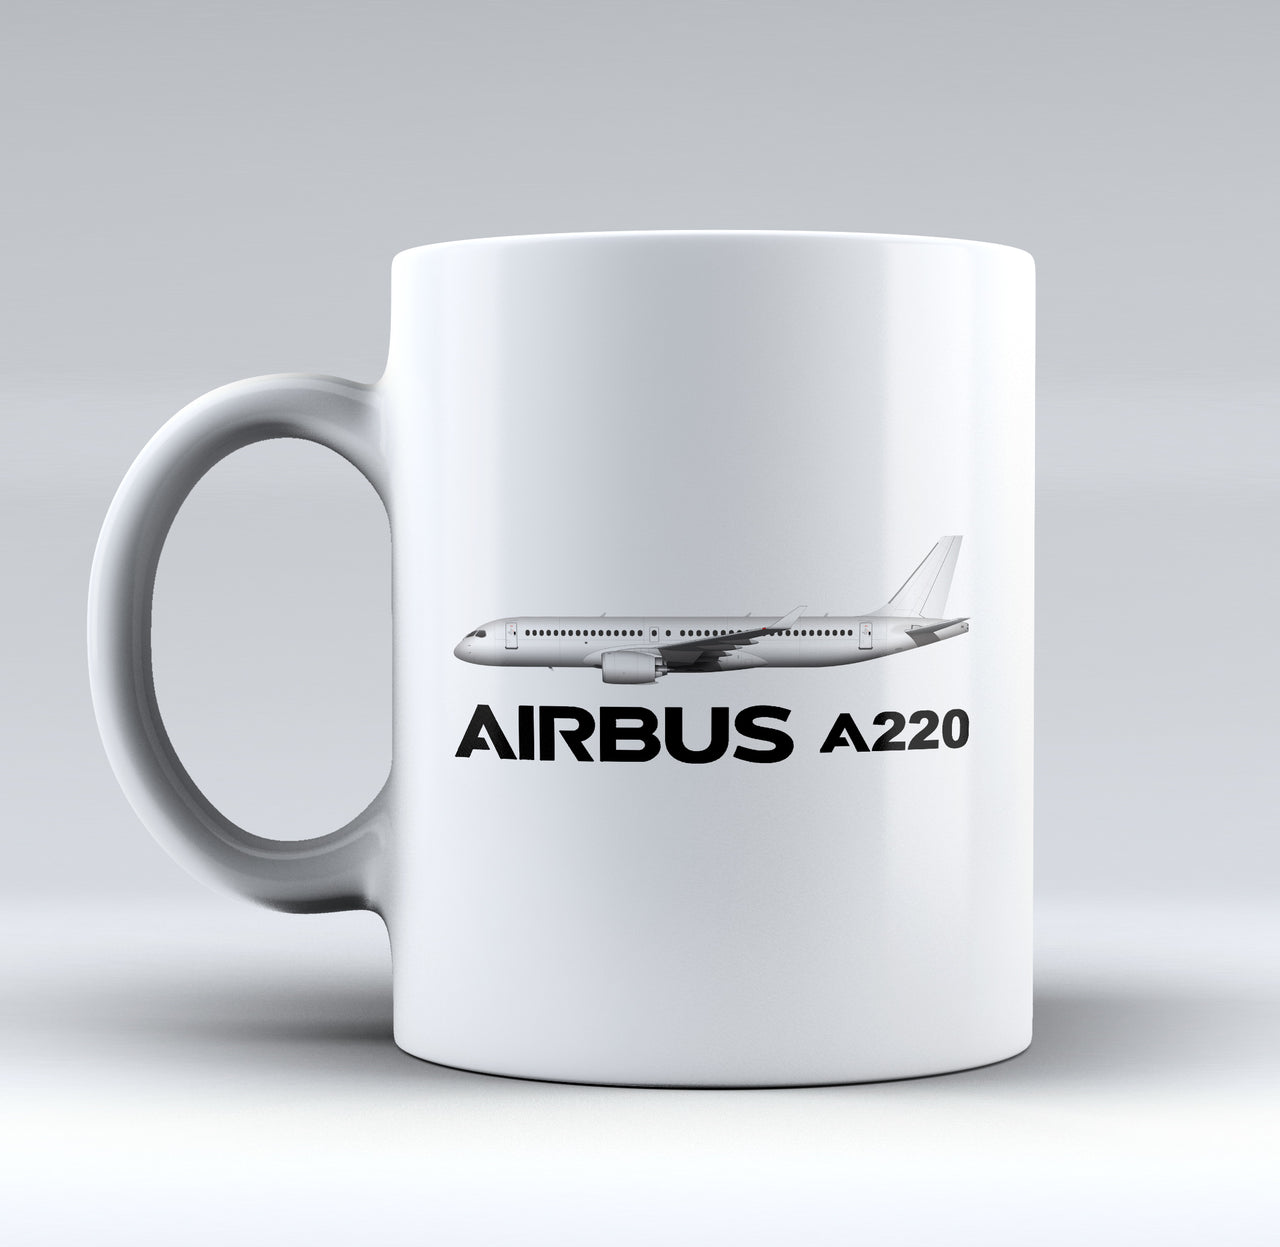 The Airbus A220 Designed Mugs